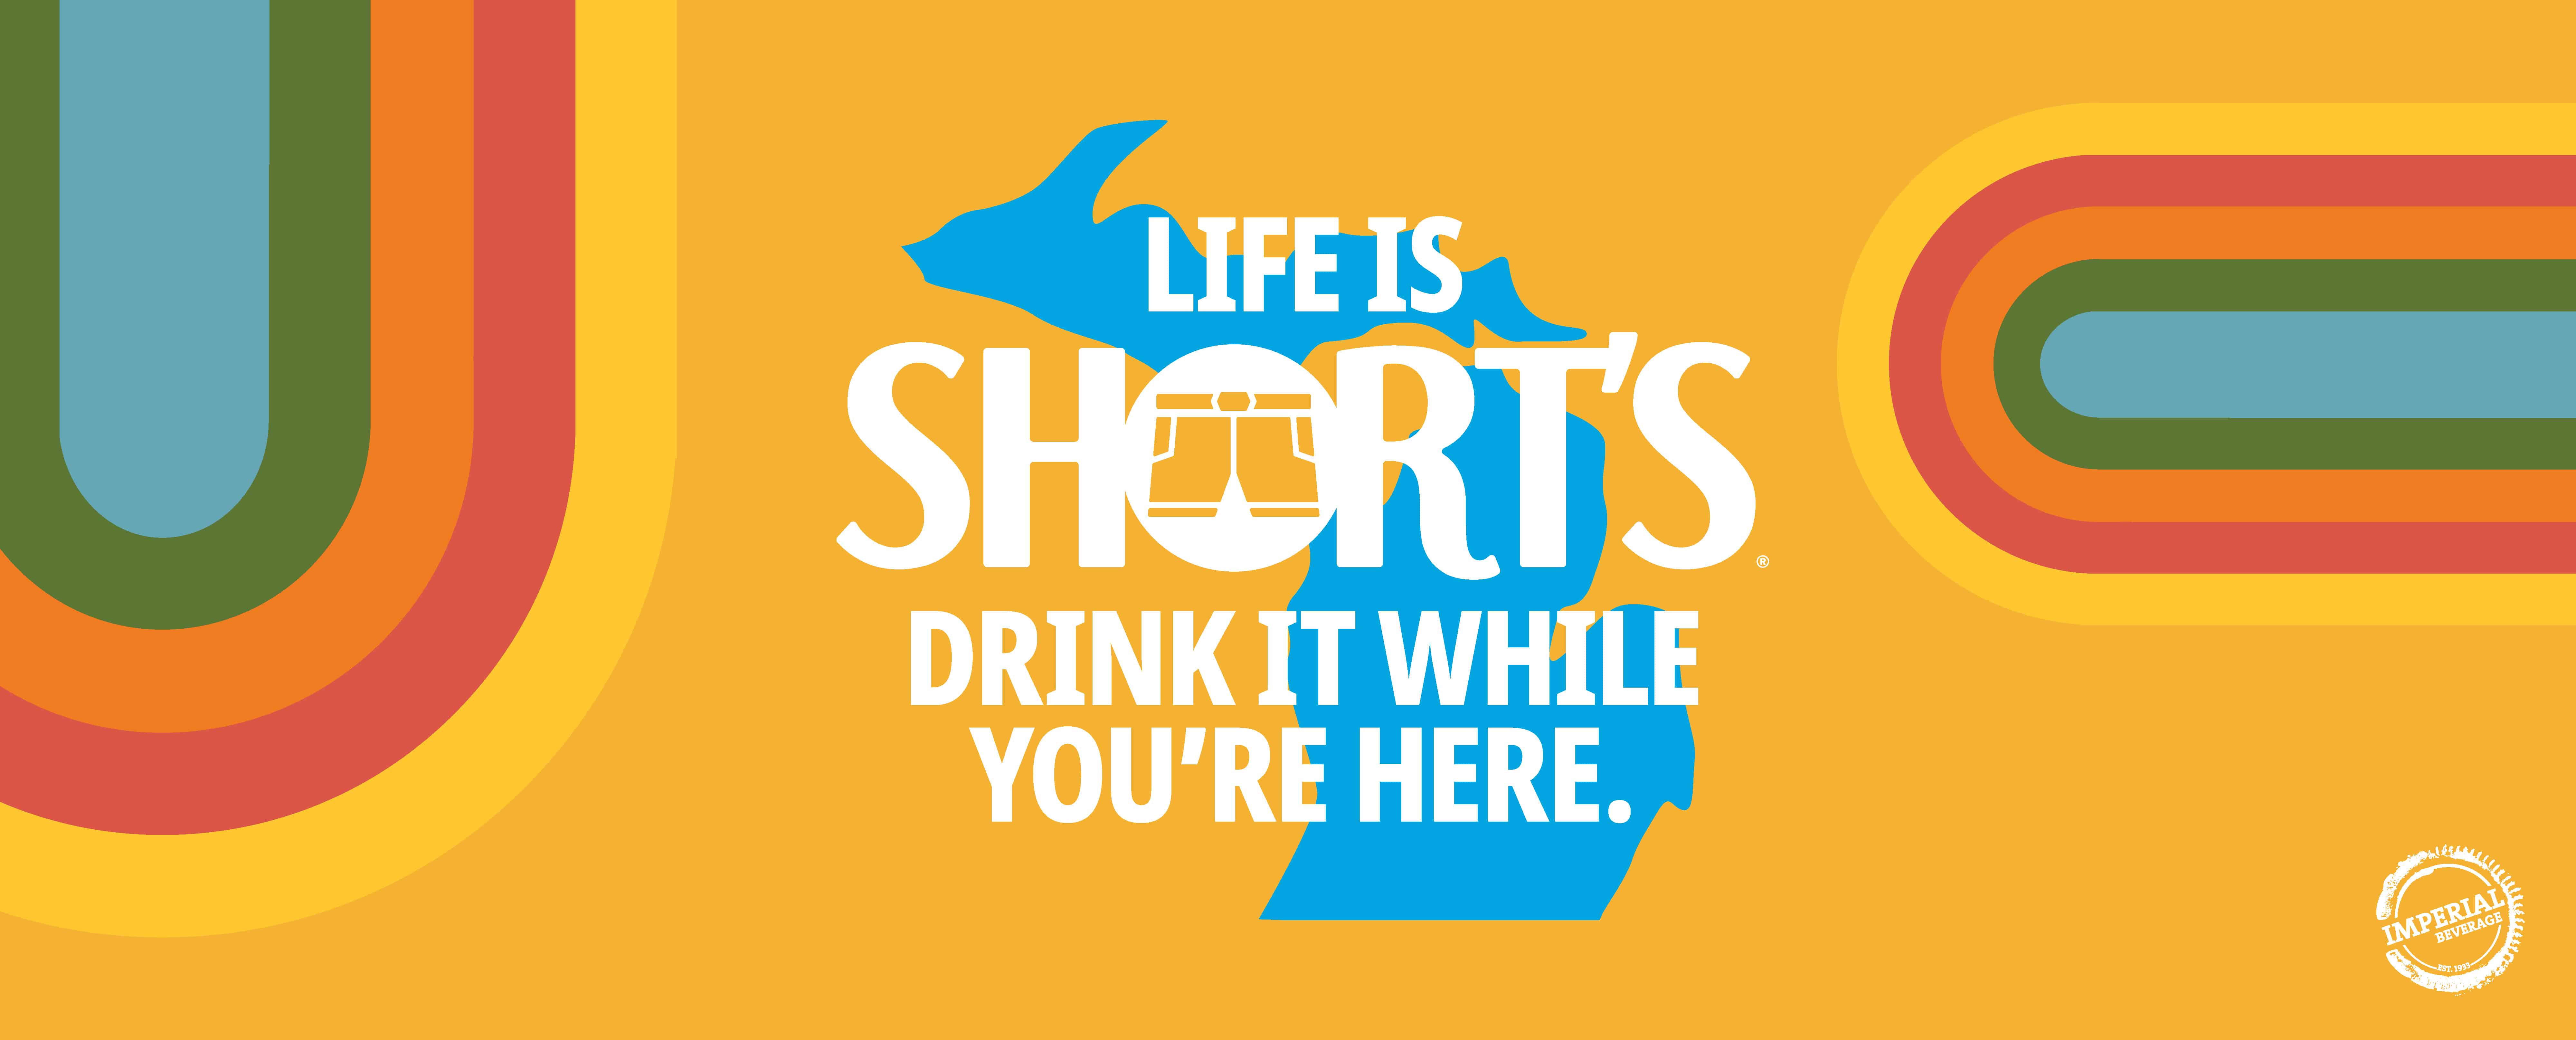 Shorts Brewing Company